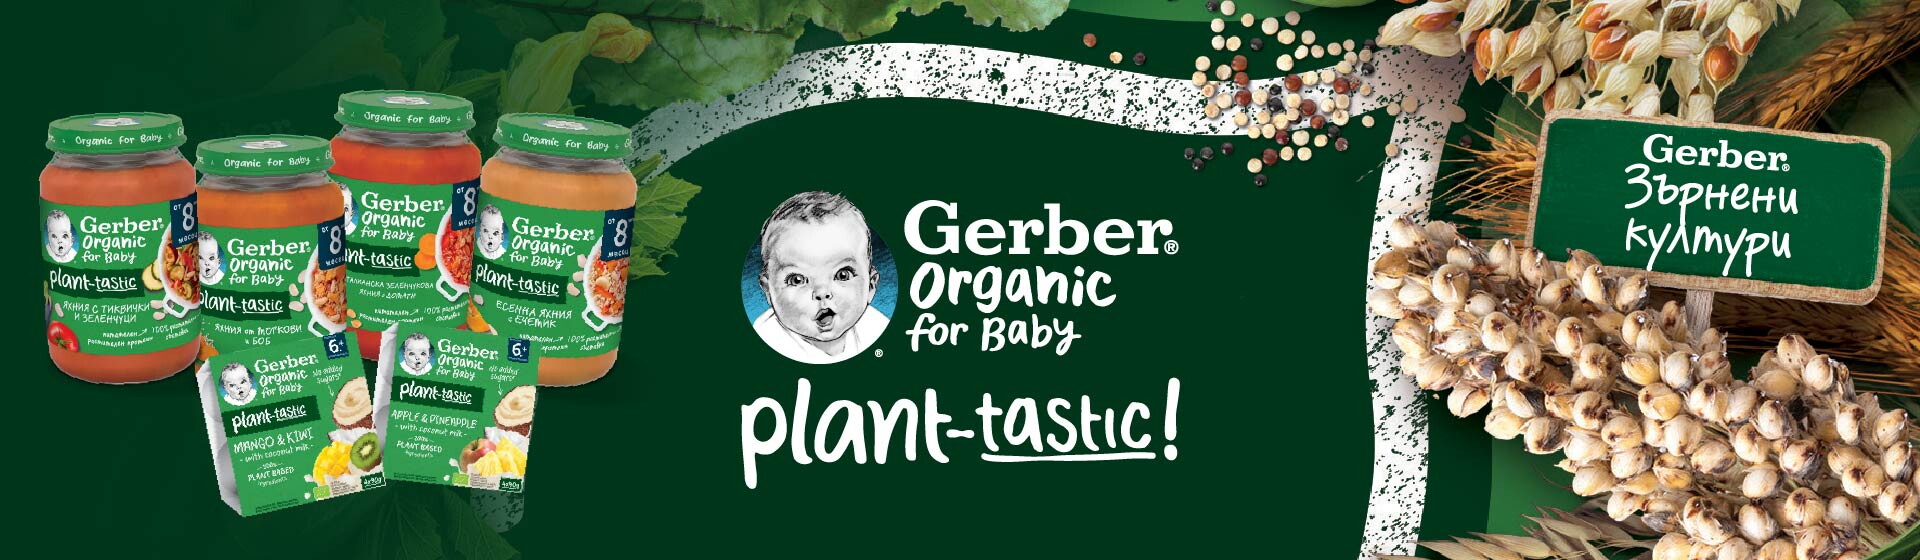 Gerber_Plant-tastic